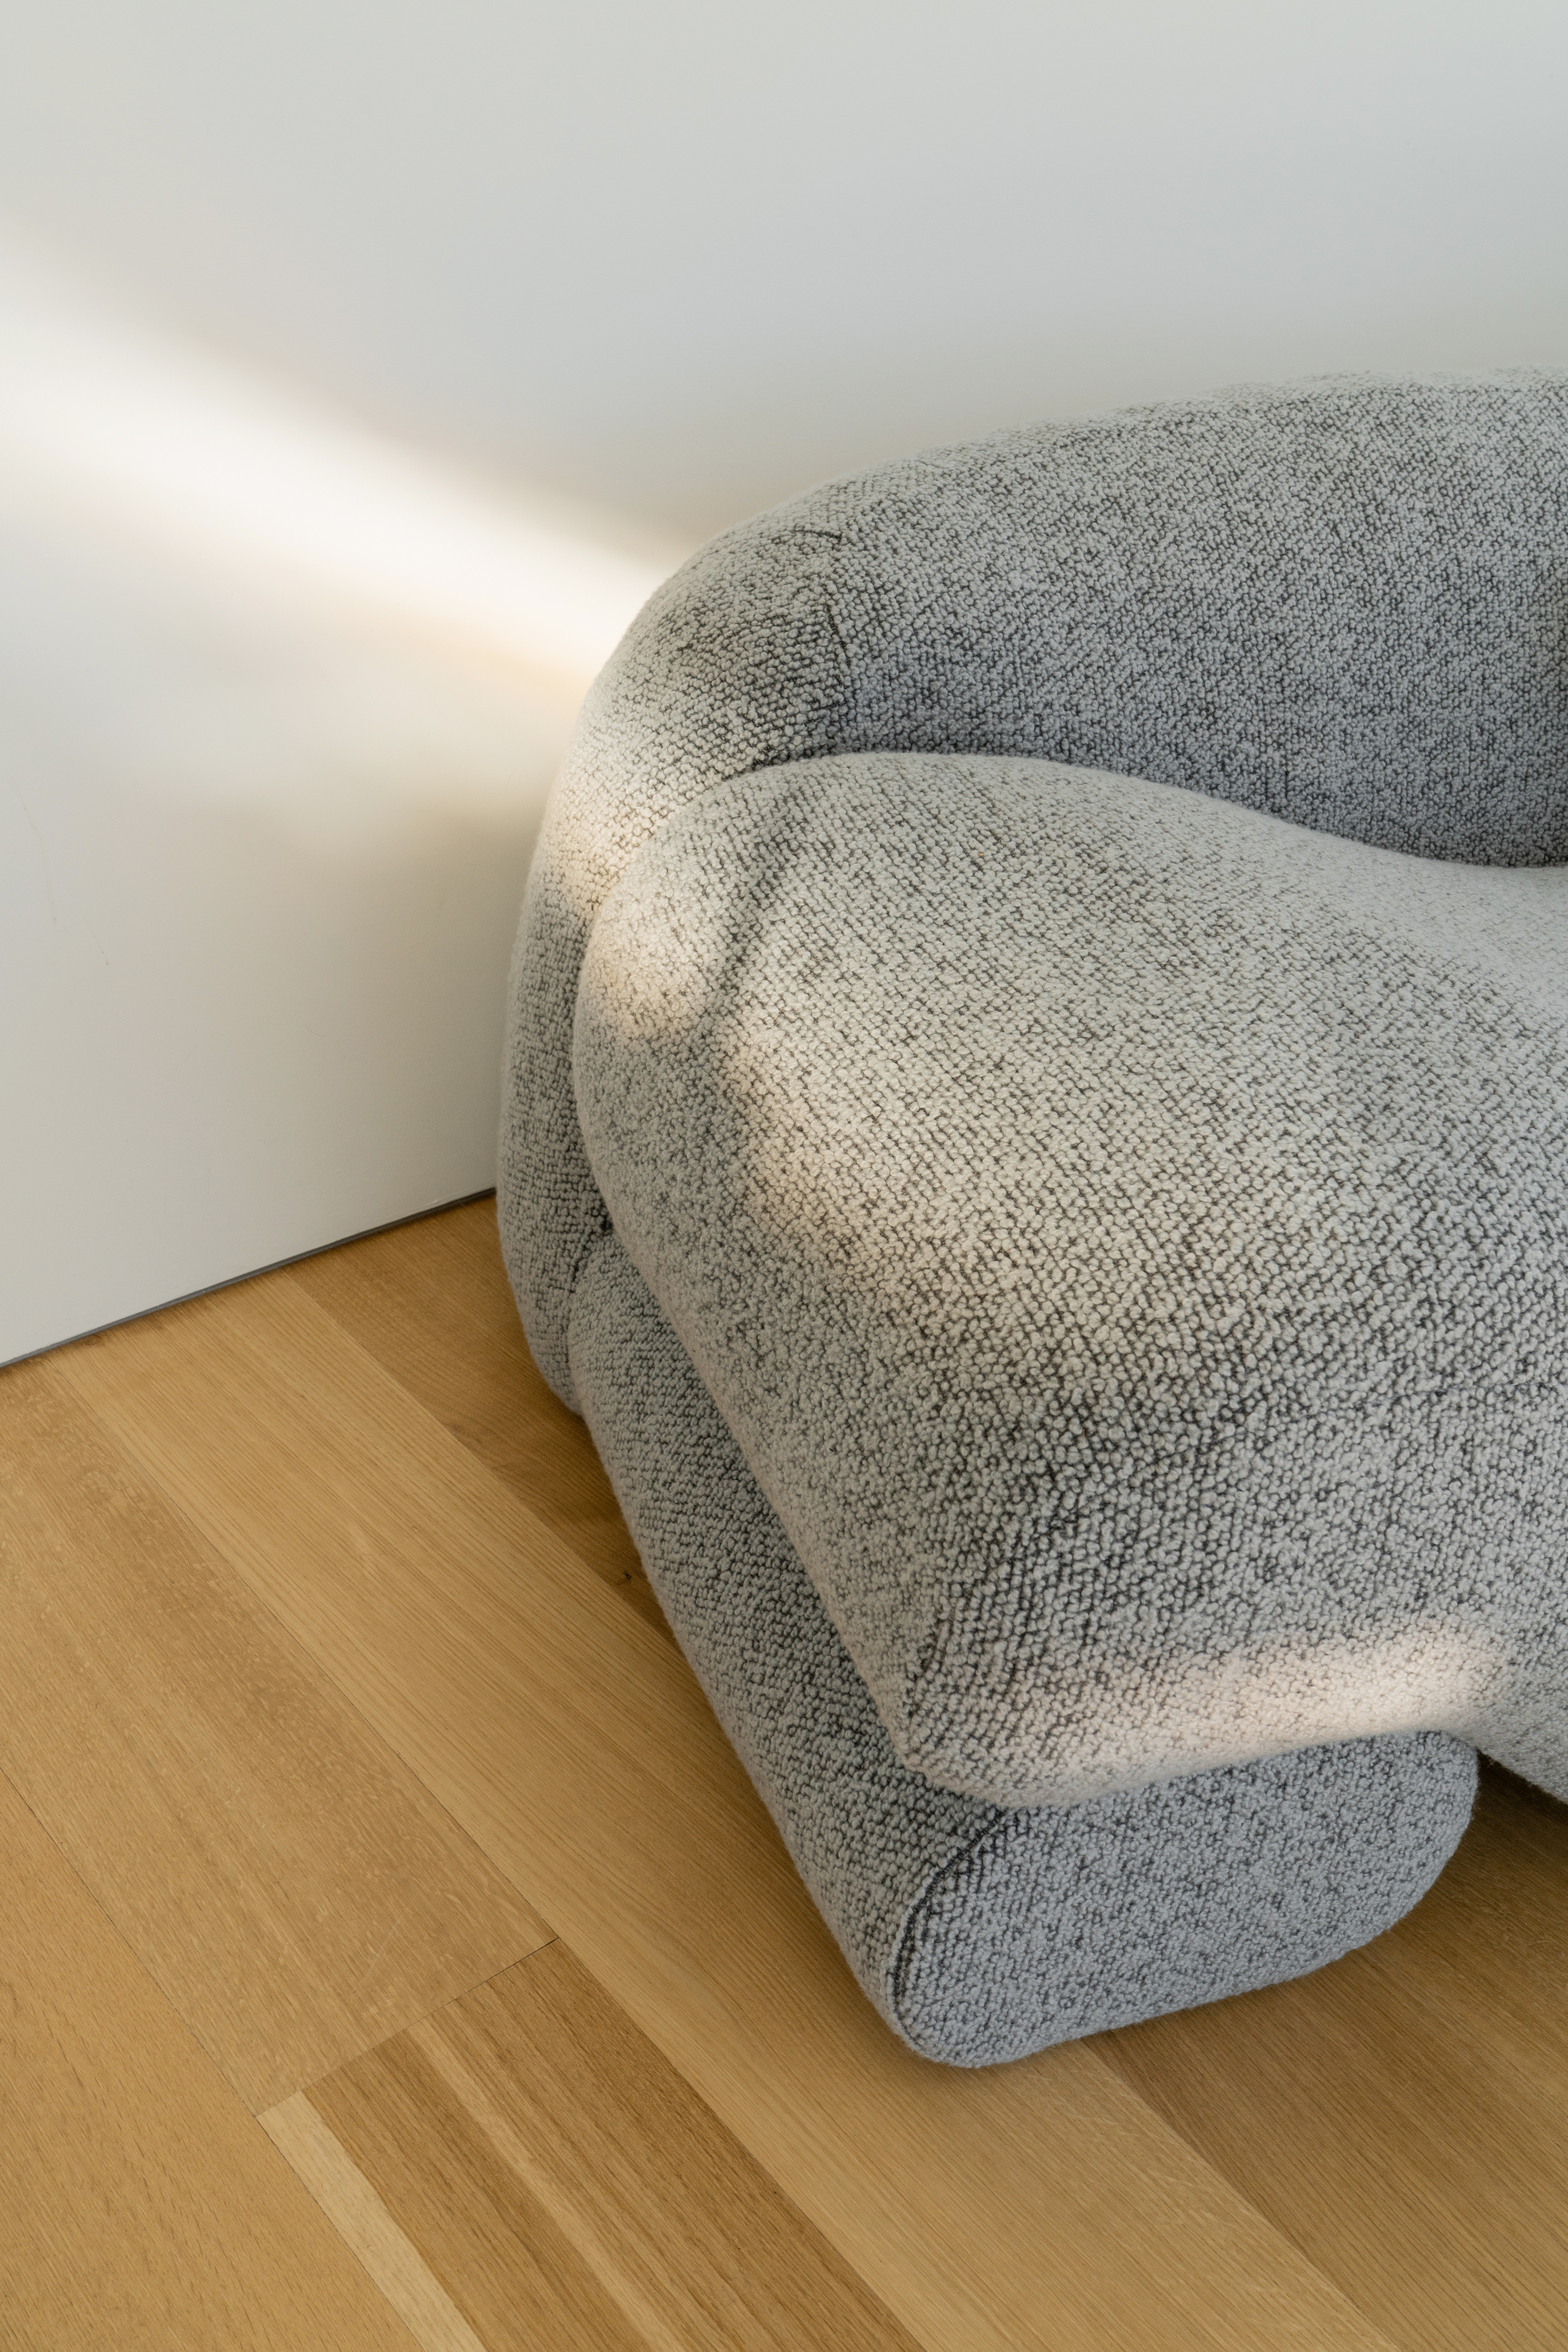 The Beanie Sofa by NEA Studio